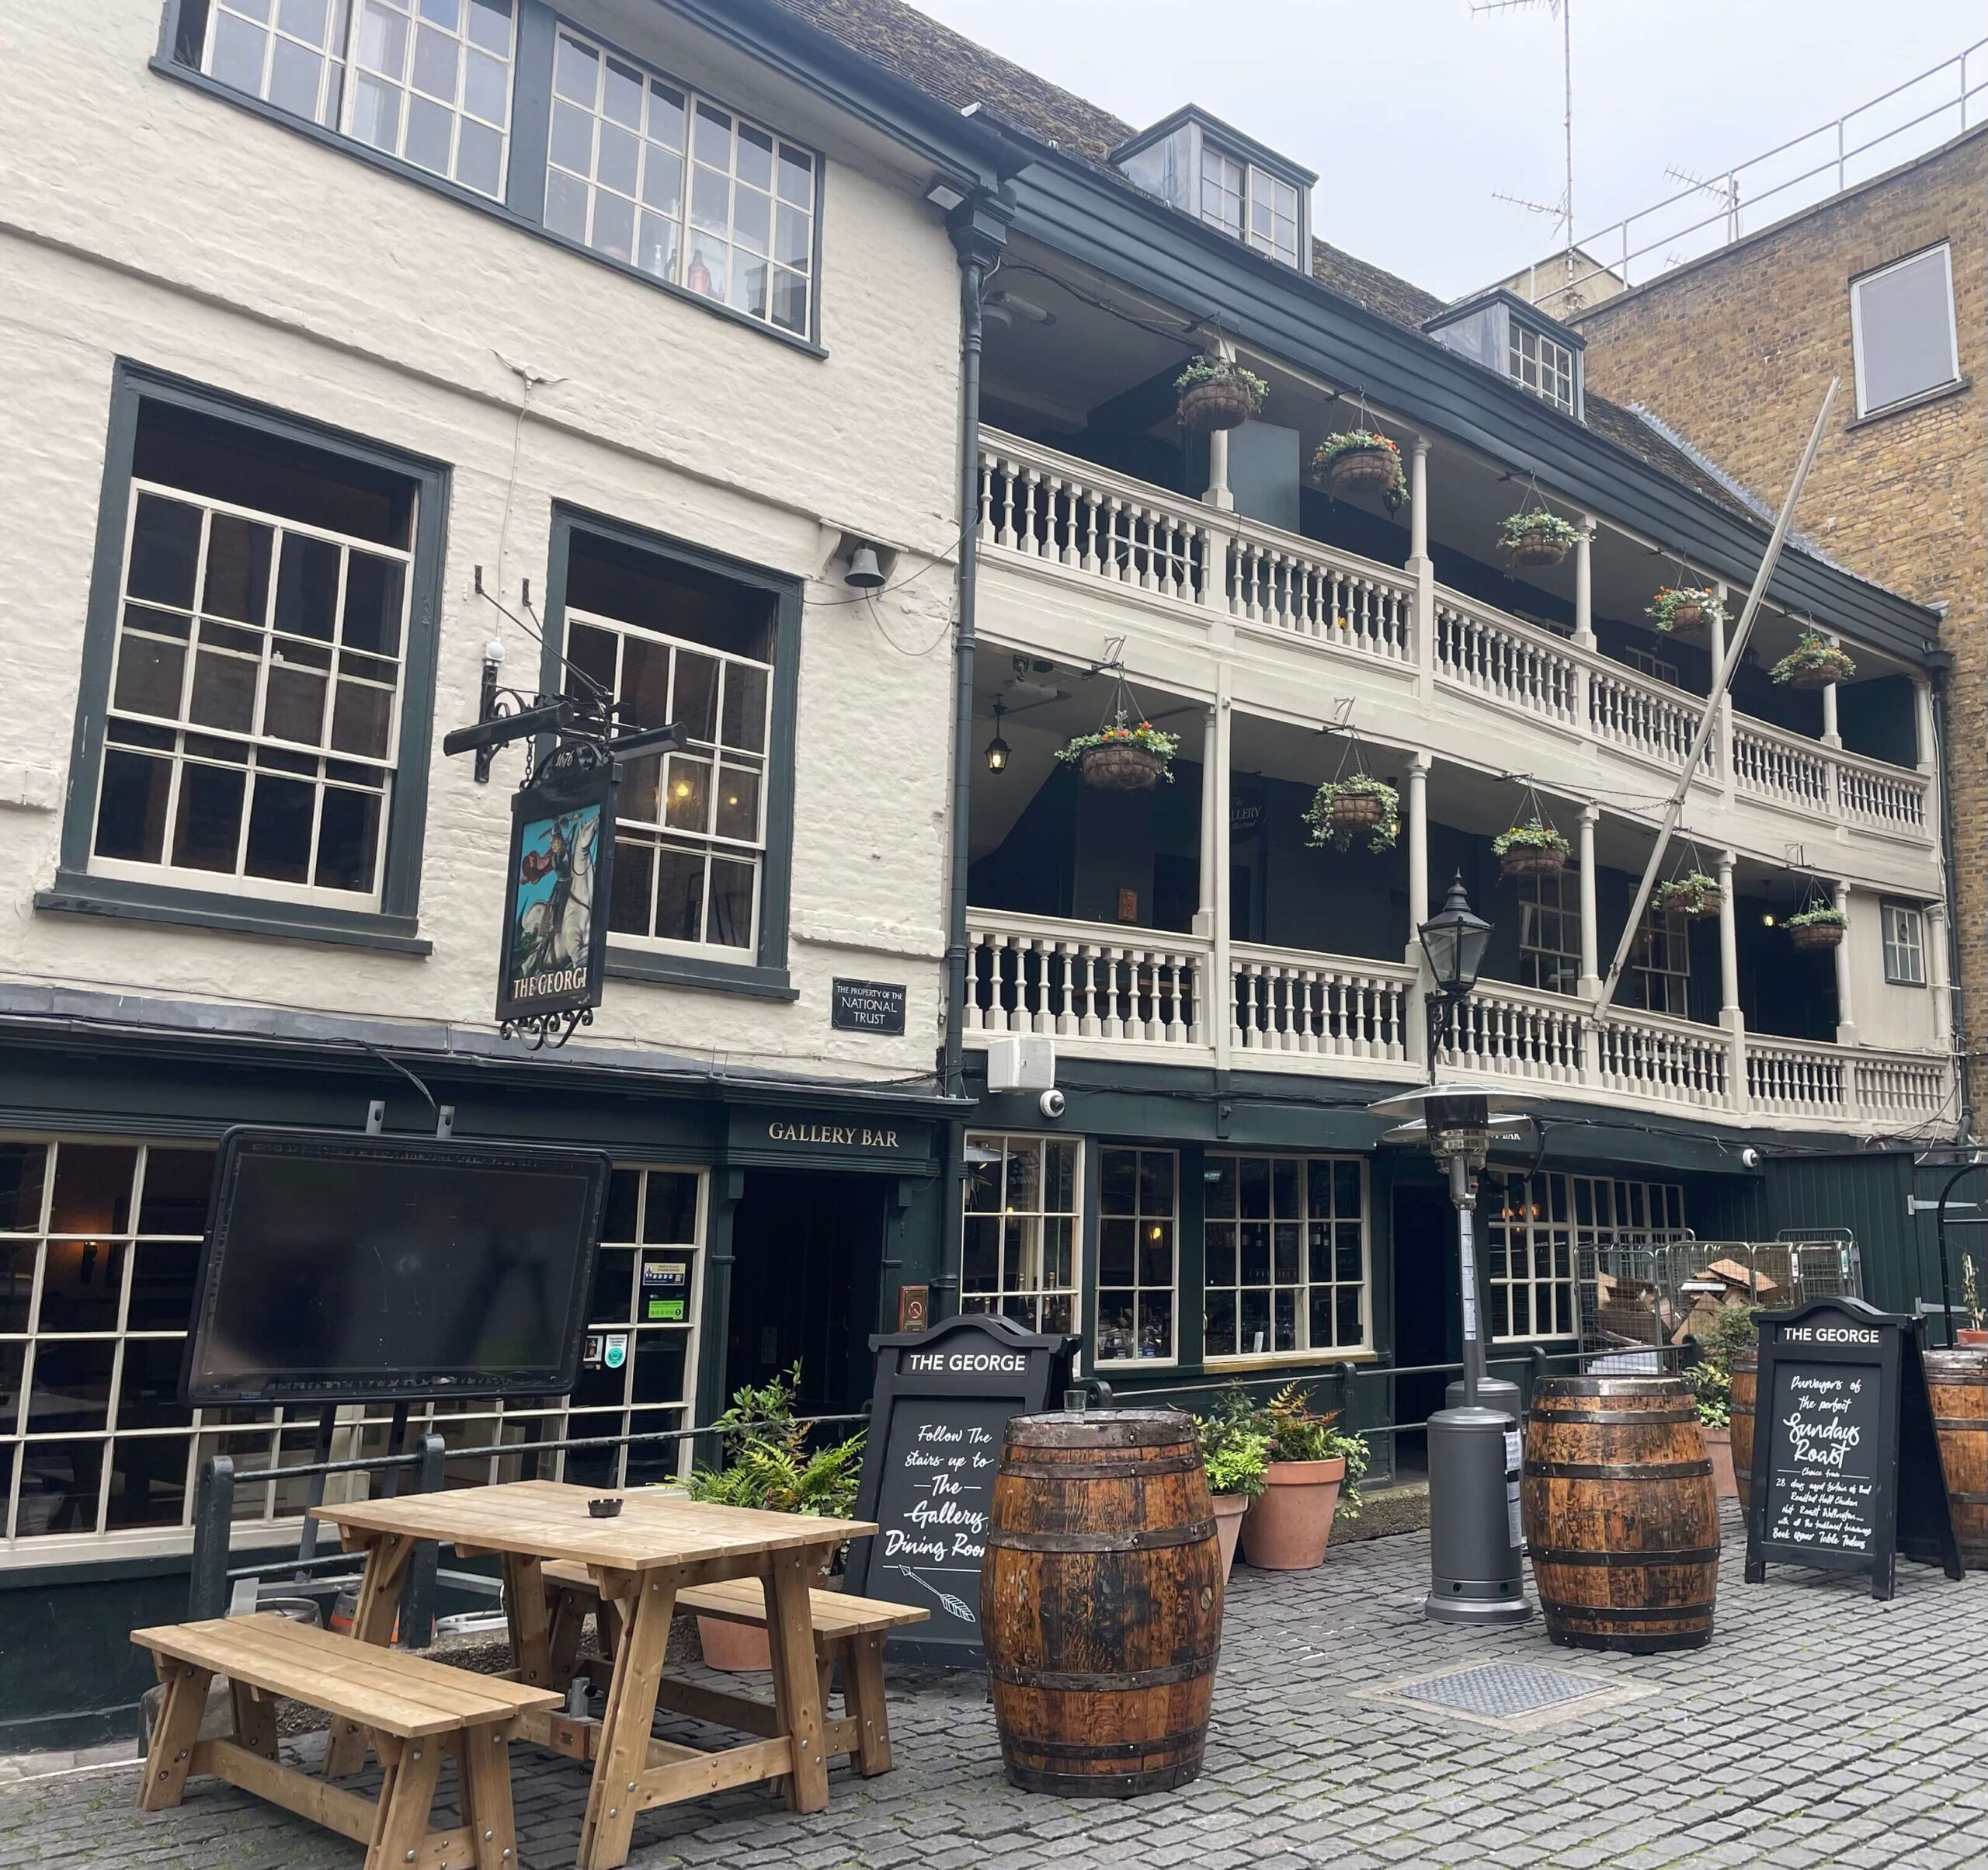 The George pub in London Bridge